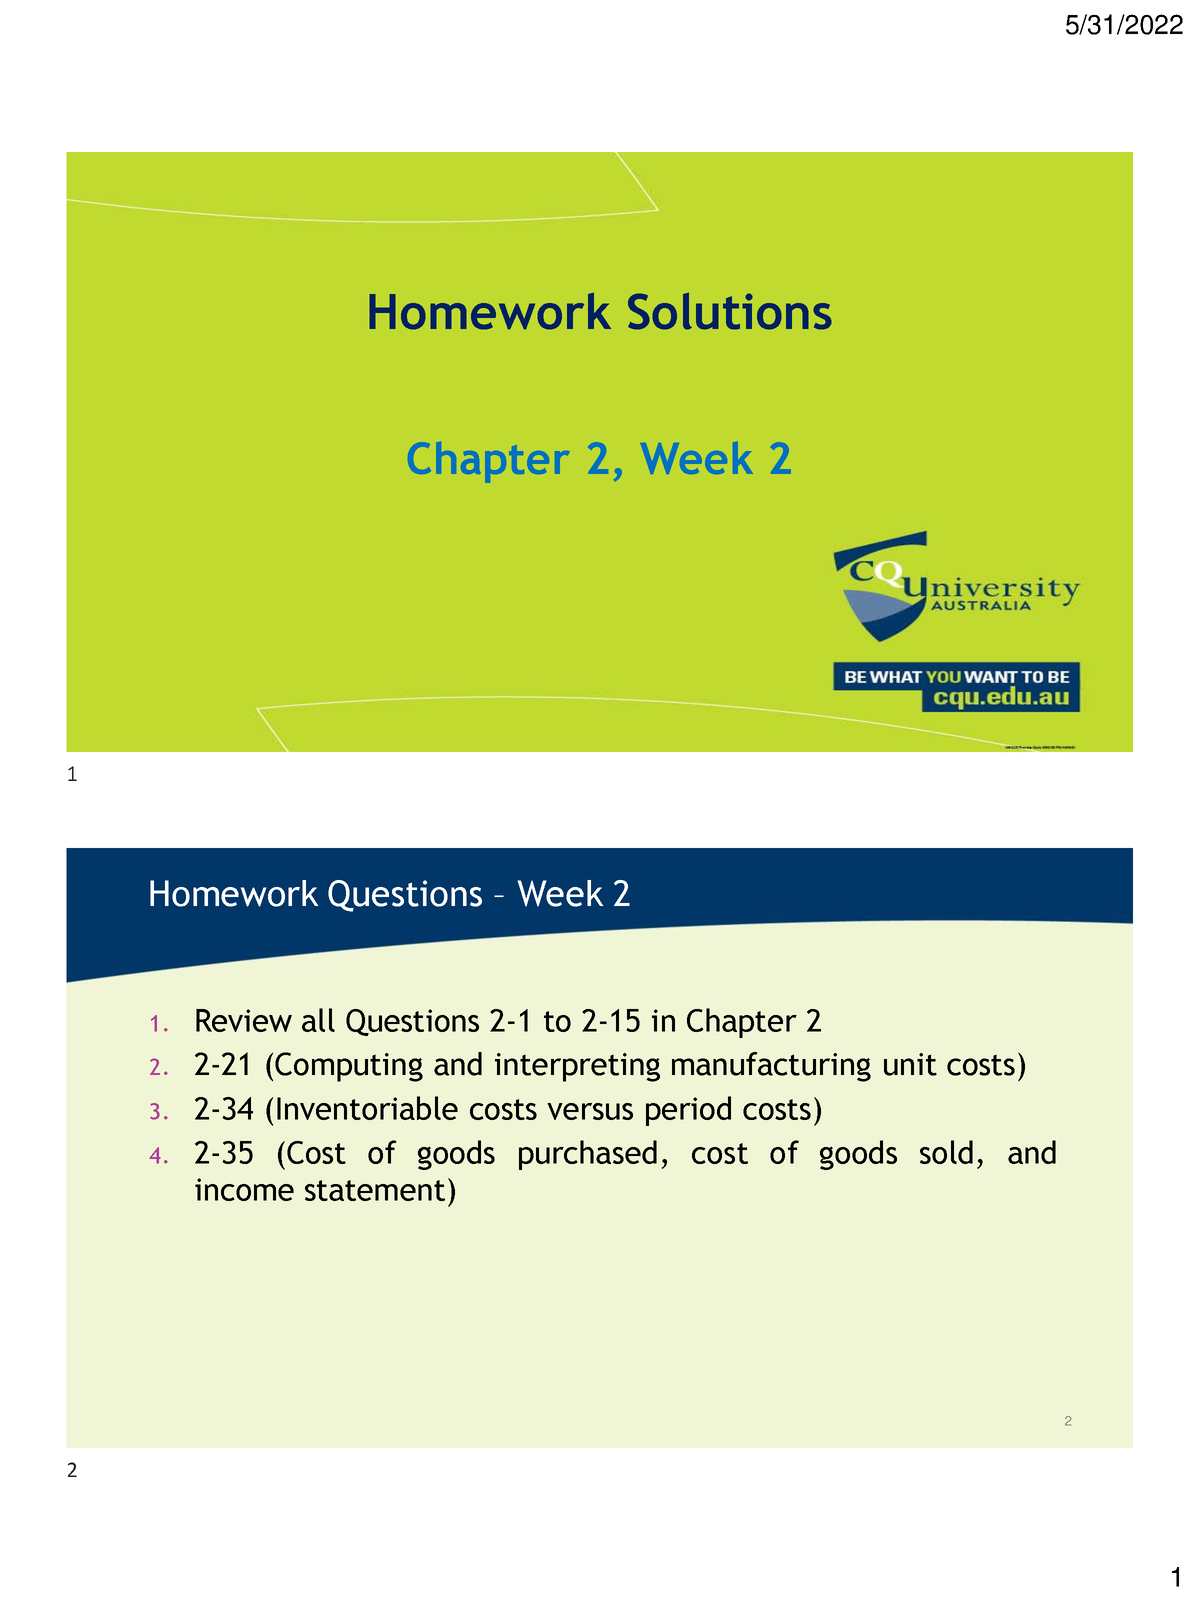 week 2 homework problems